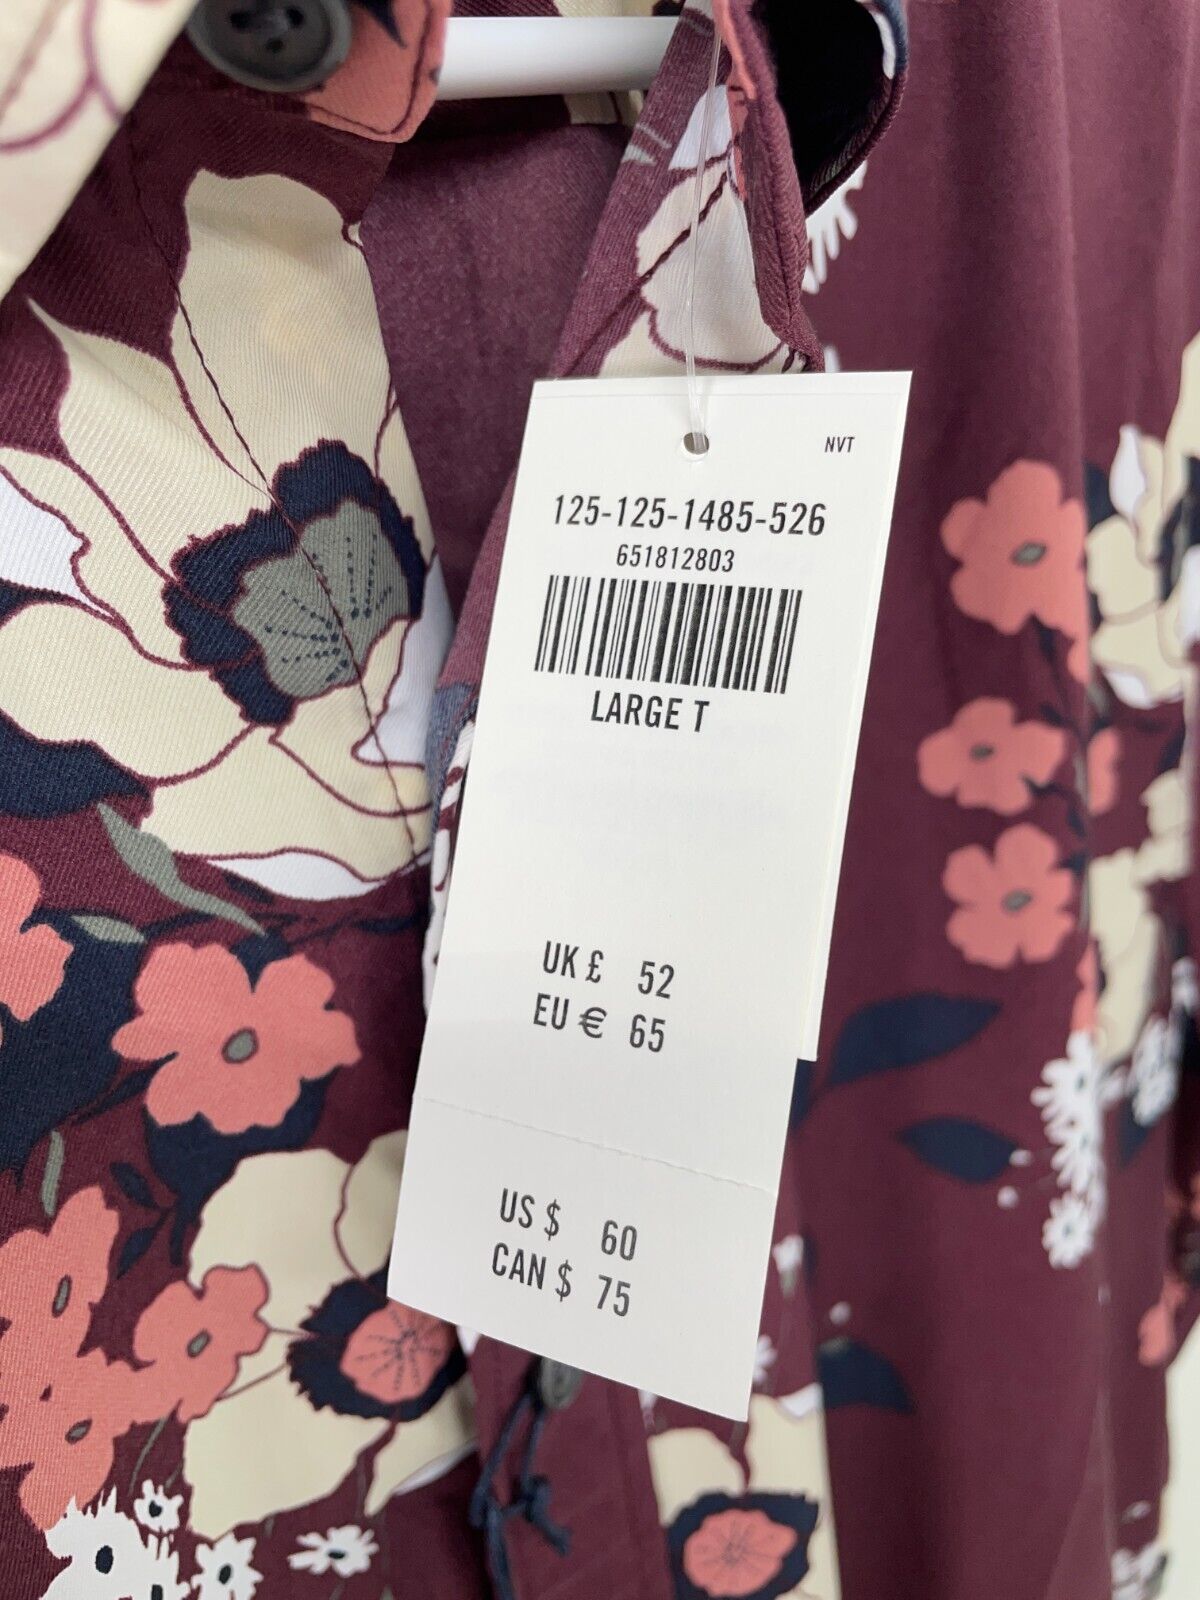 Abercrombie & Fitch Mens LT Performance Button-Up Shirt Burgundy Floral Hawaiian